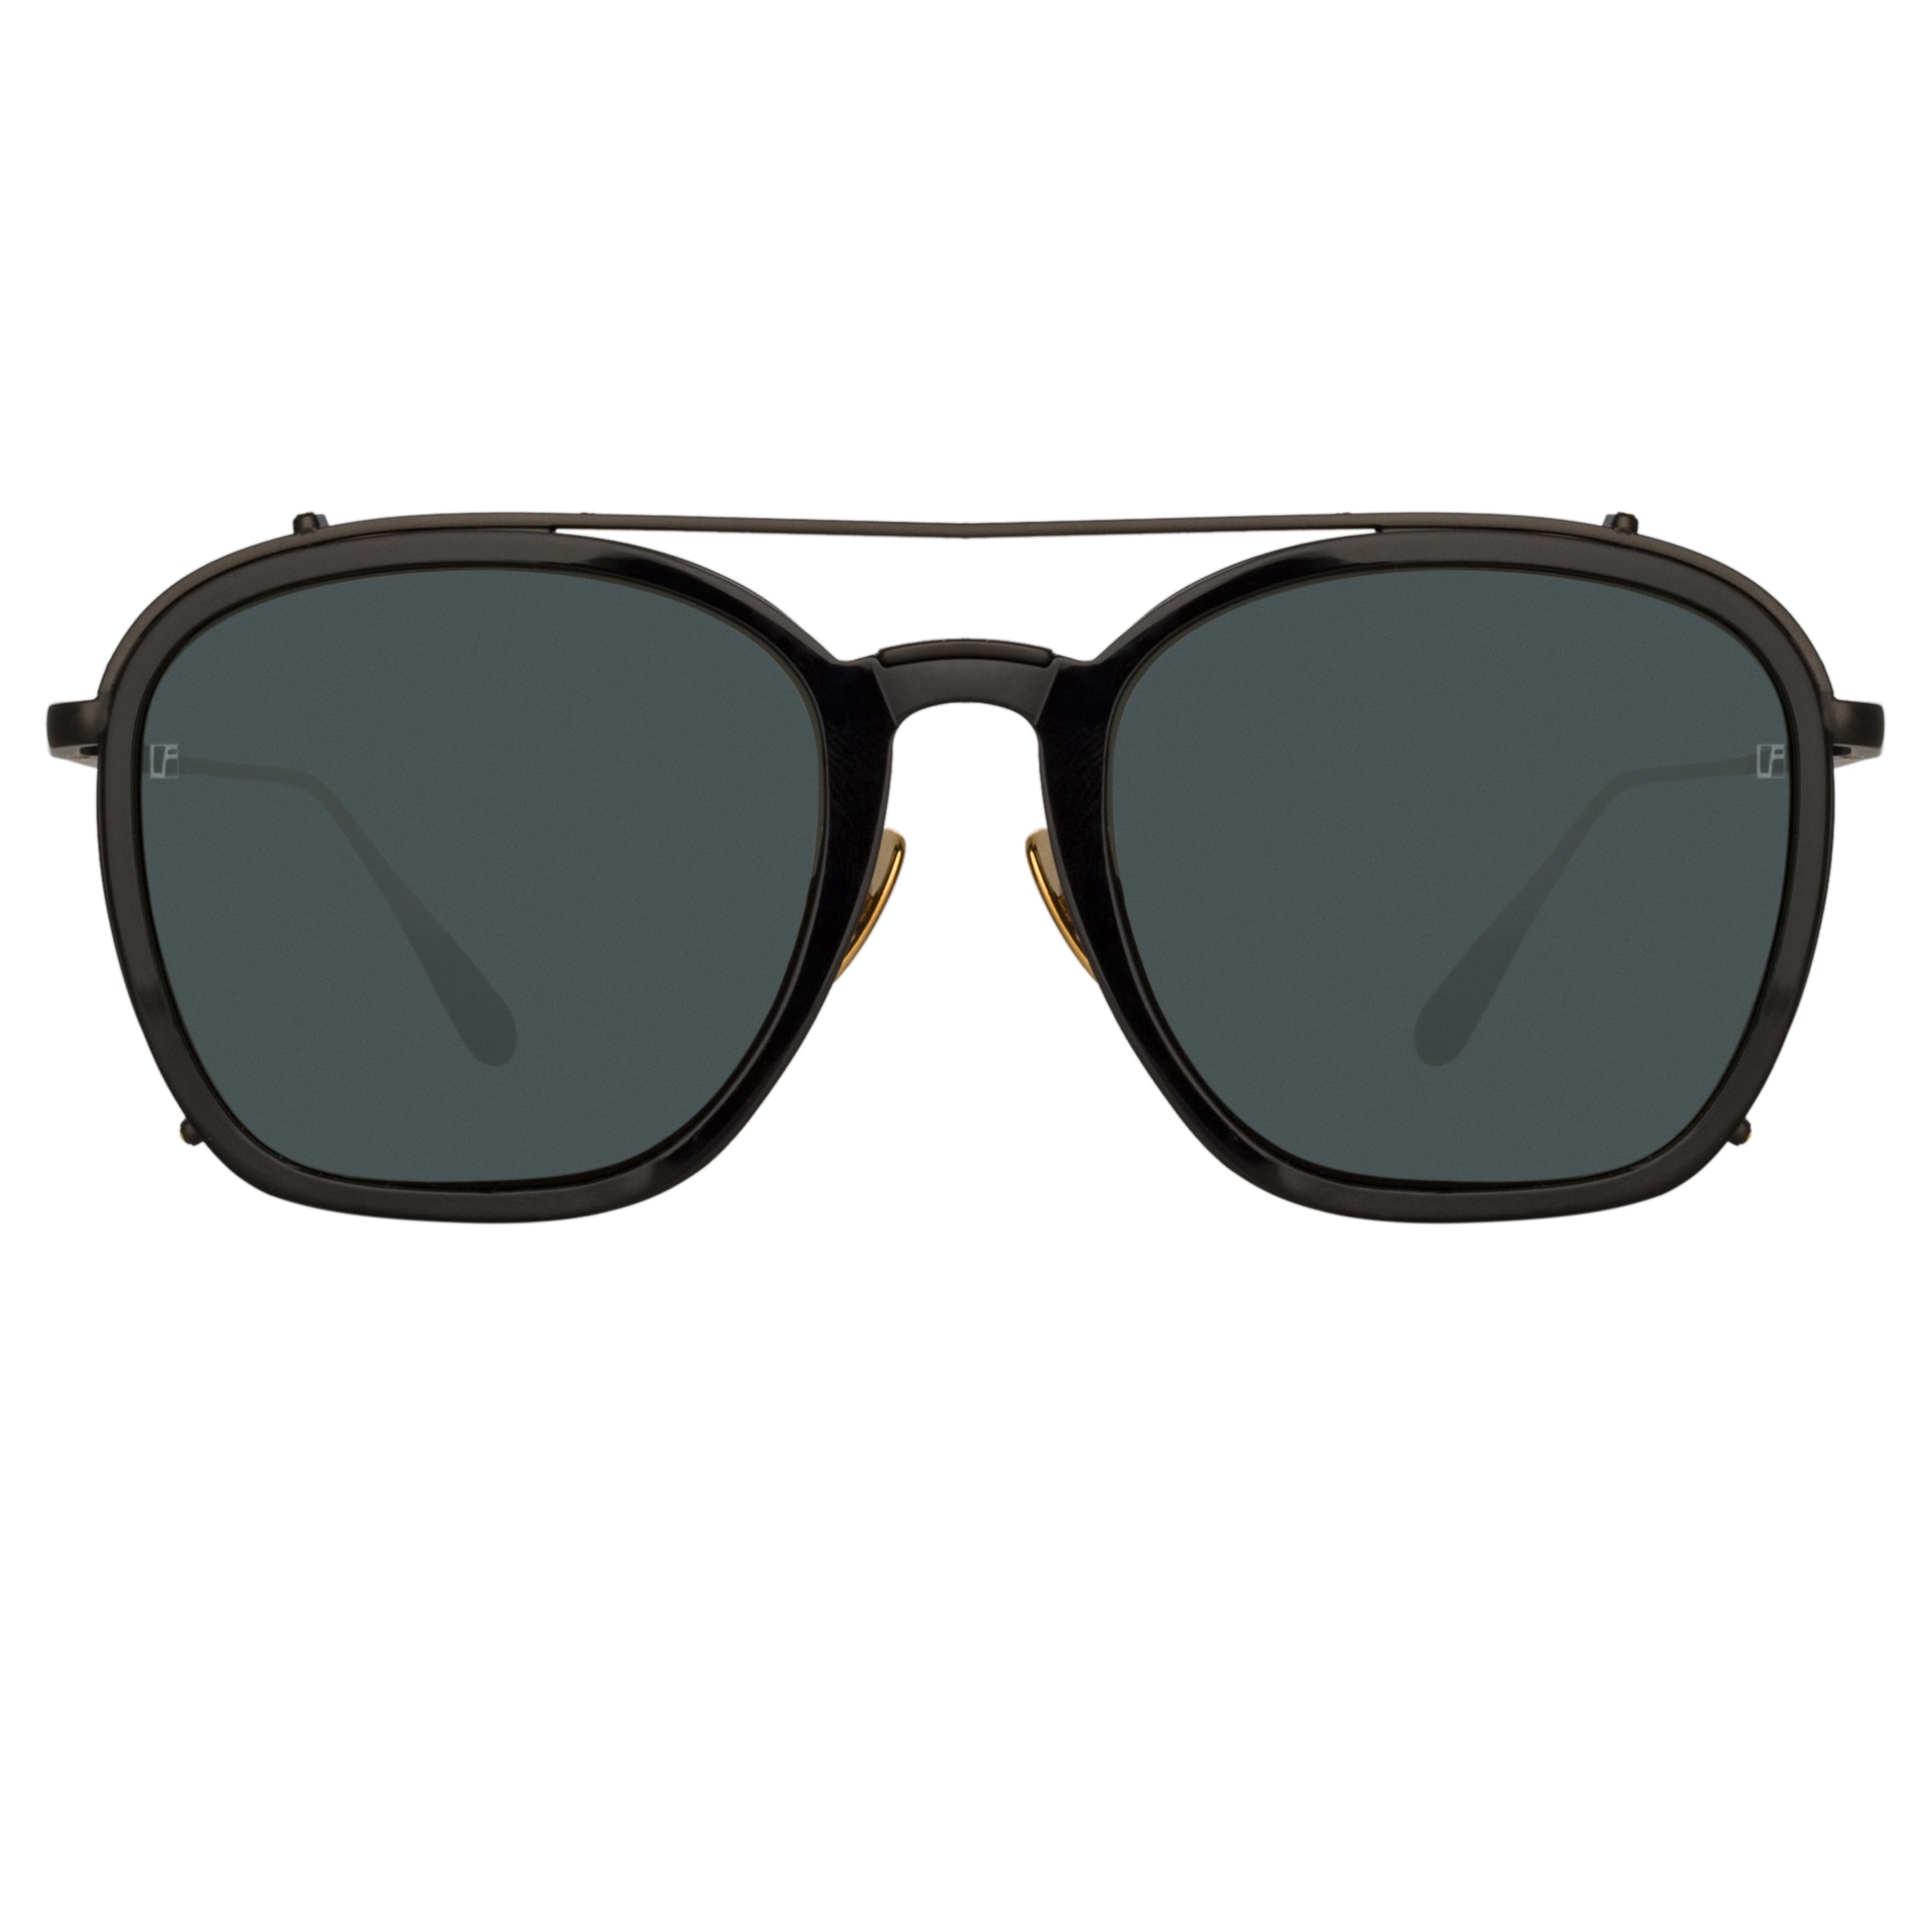 Aston Square Sunglasses in Nickel